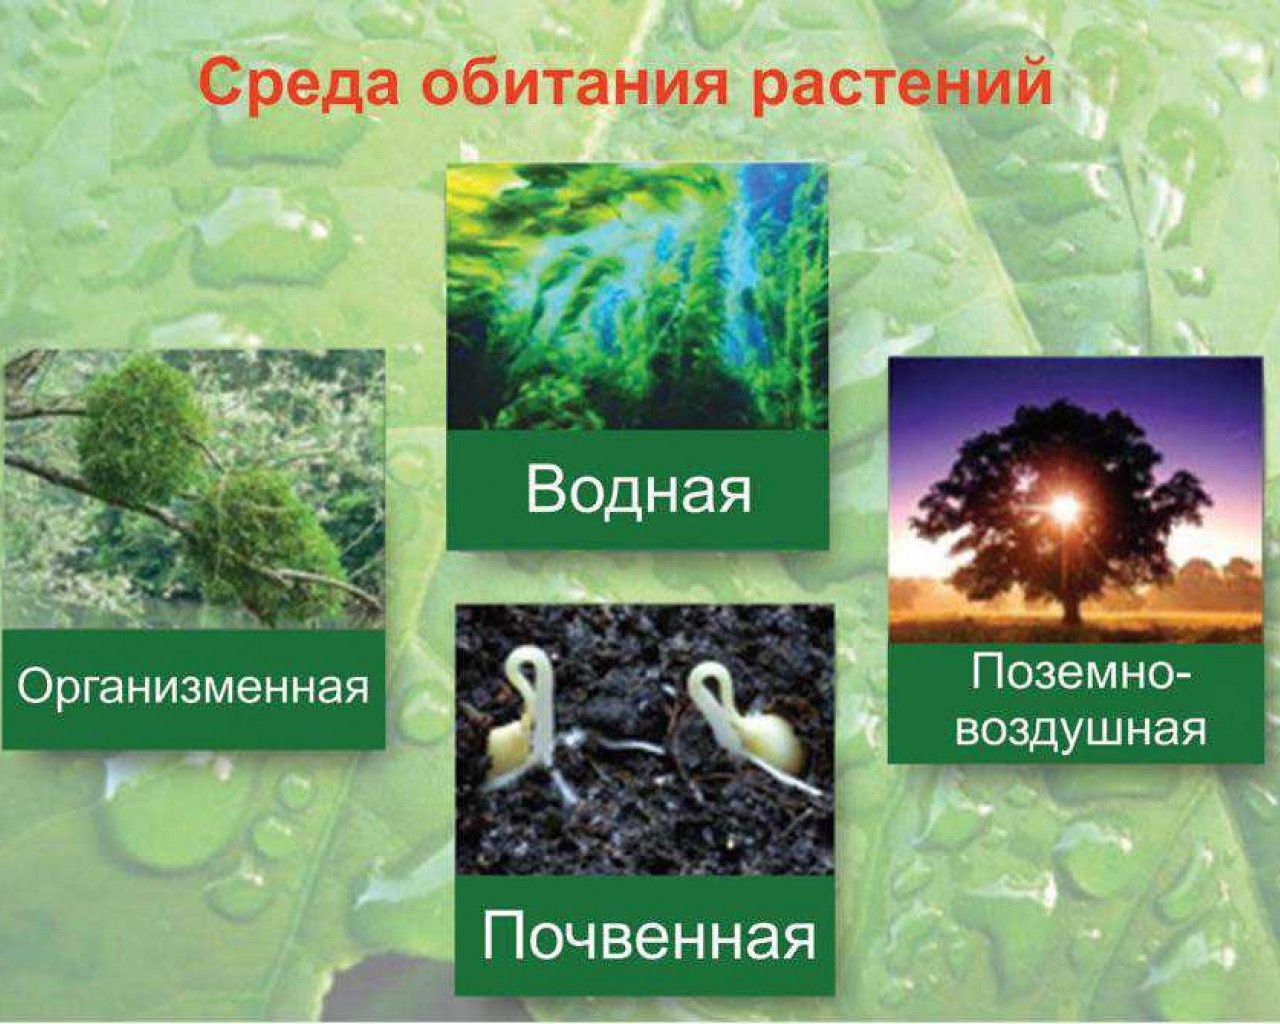 Среды обитания 11 класс биология. Среда обитания растений. Условия обитания растений. Условия среды обитания растений. Растения разных сред обитания.